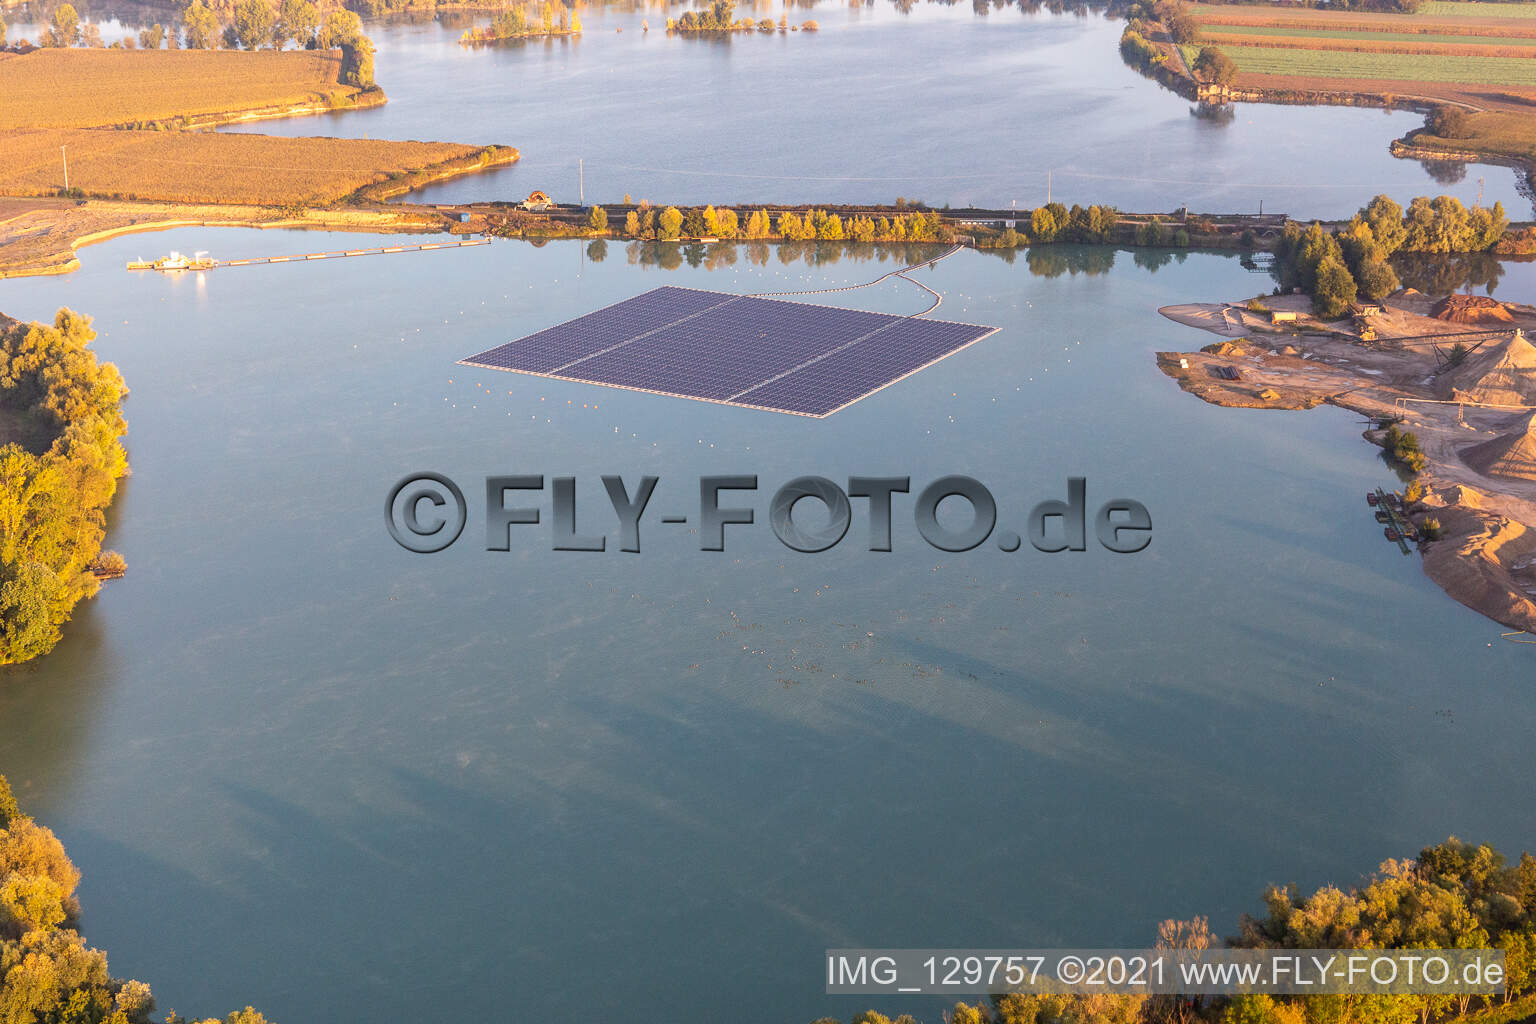 Floating photovoltaic island on Kiesweier in Leimersheim in the state Rhineland-Palatinate, Germany